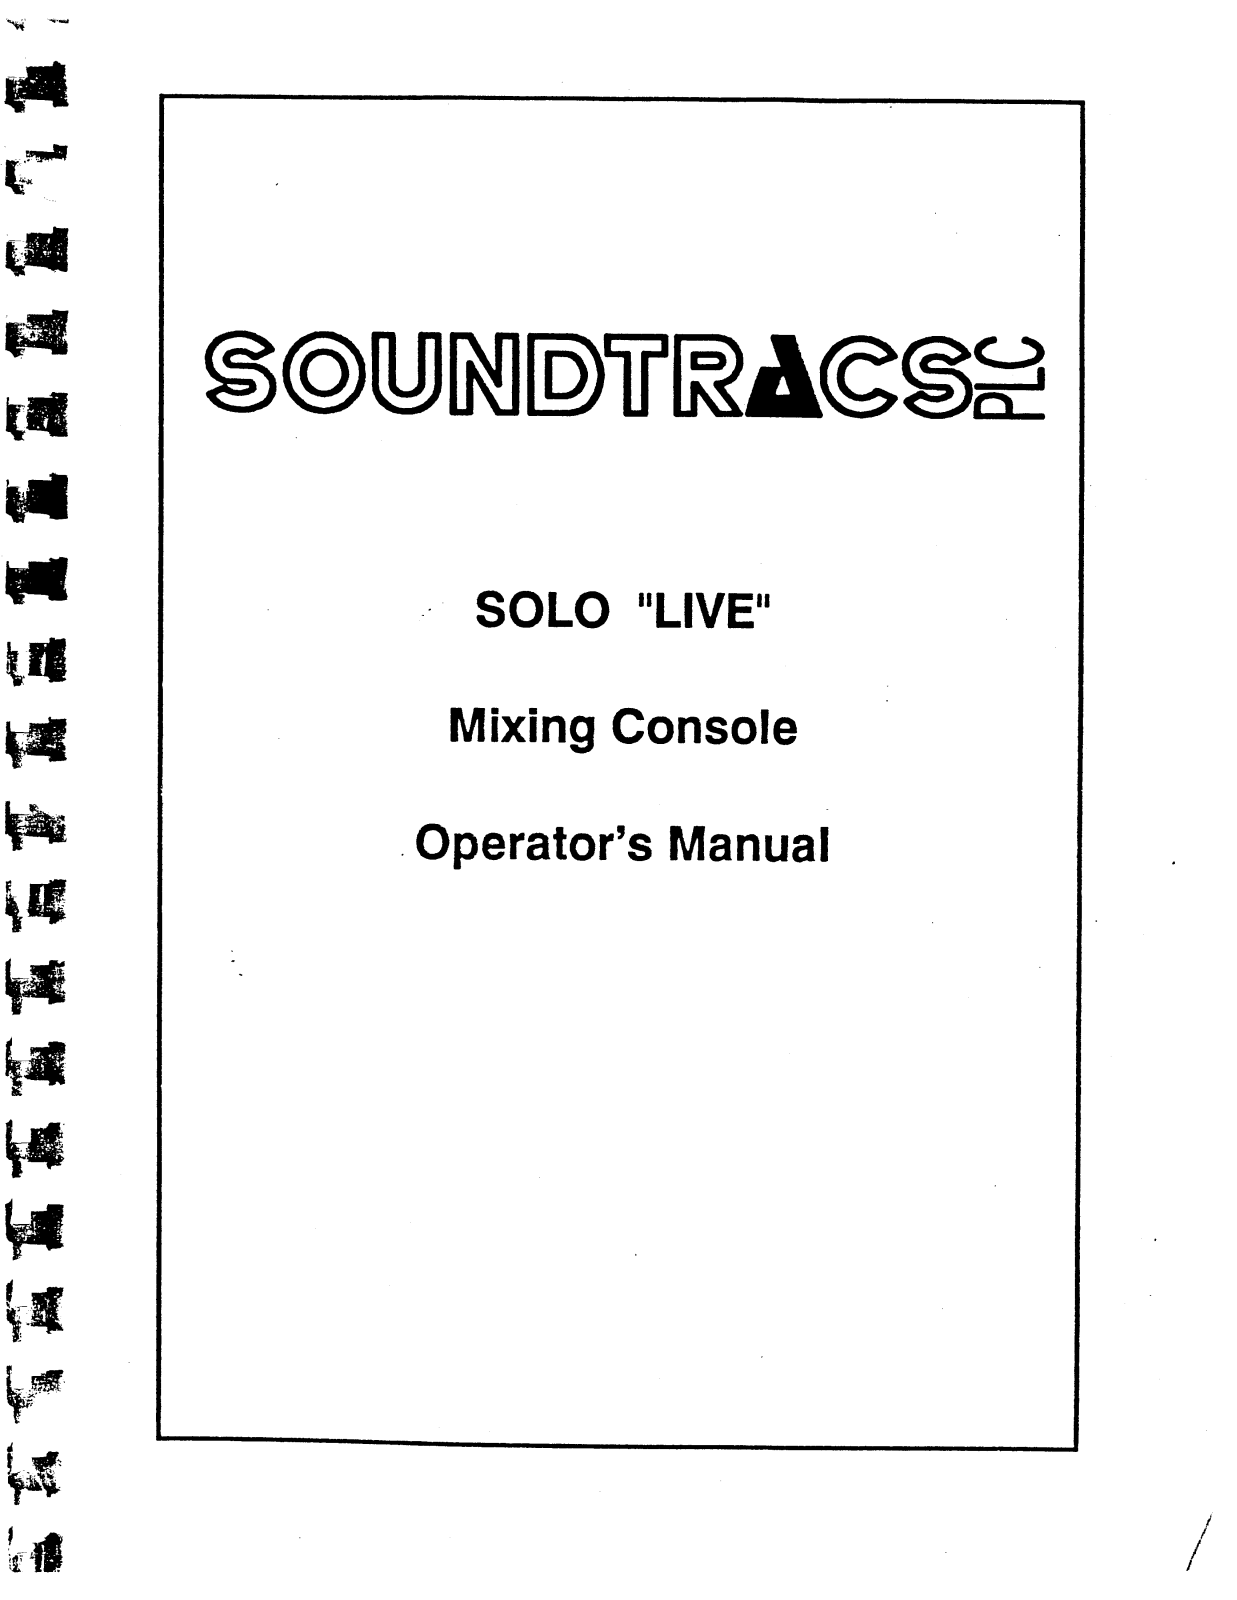 Soundtracs PLC Solo Live Service manual